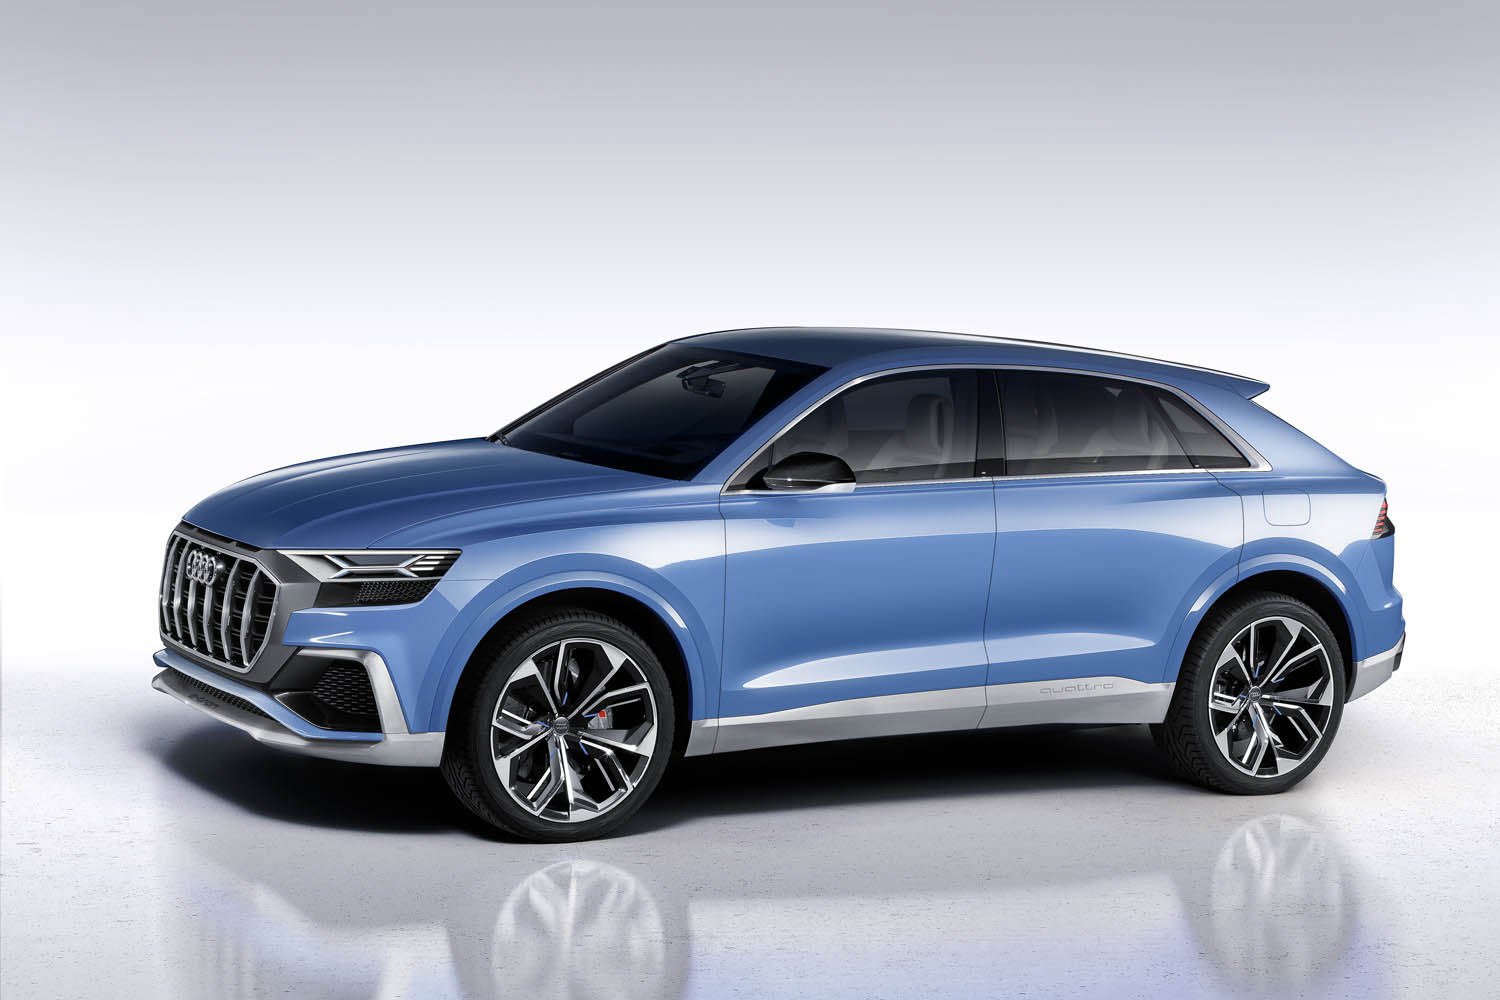 Unlock The Future With The 2017 Audi Q8 Concept